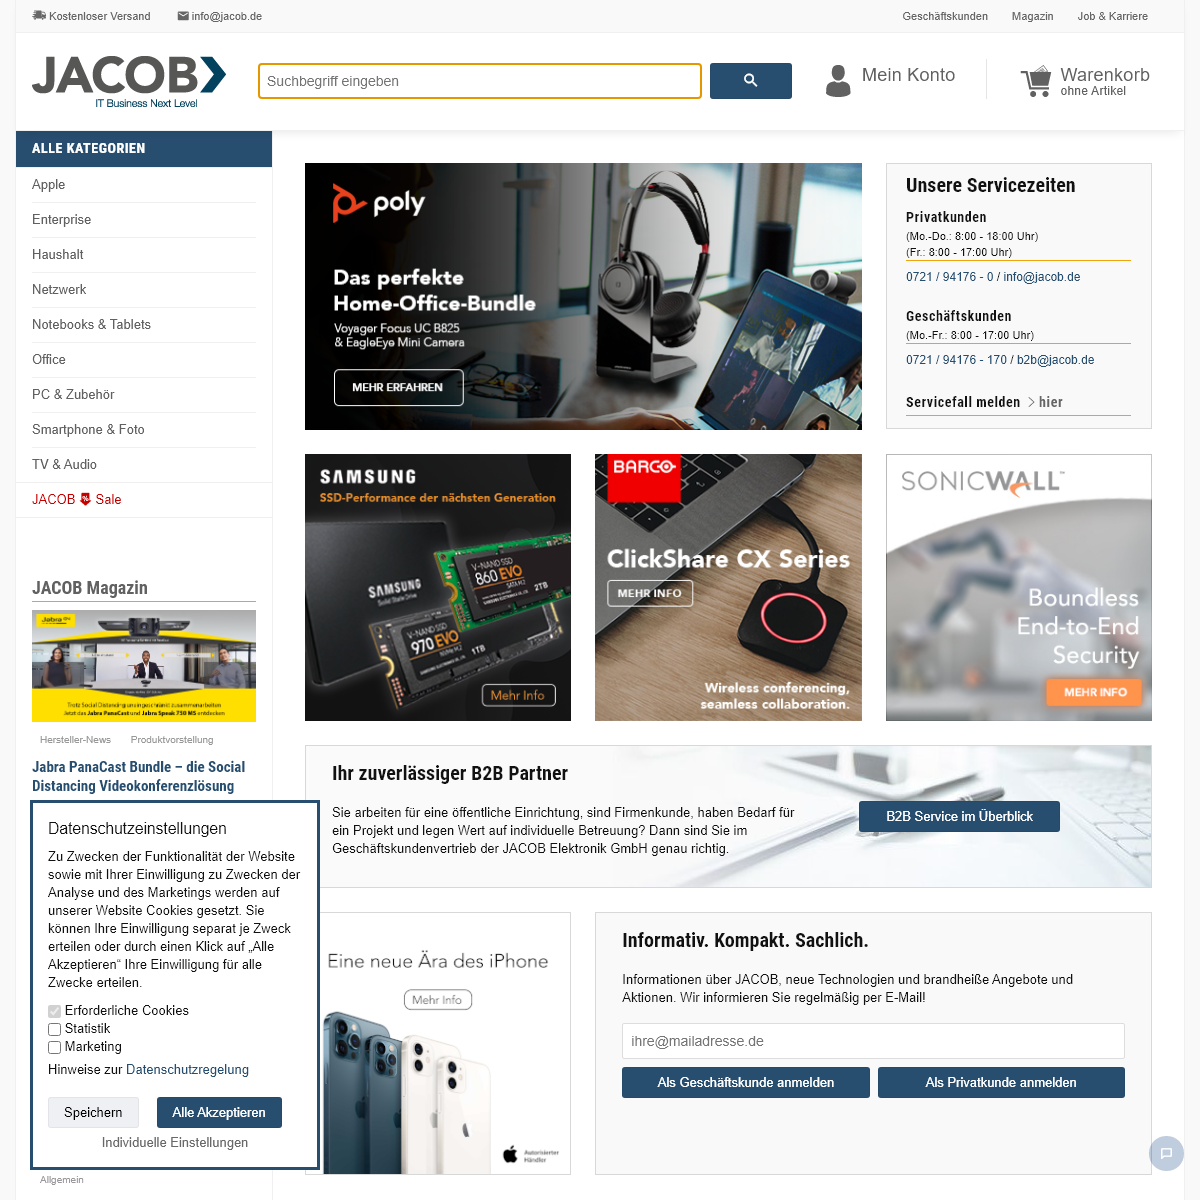 A complete backup of jacob-computer.de